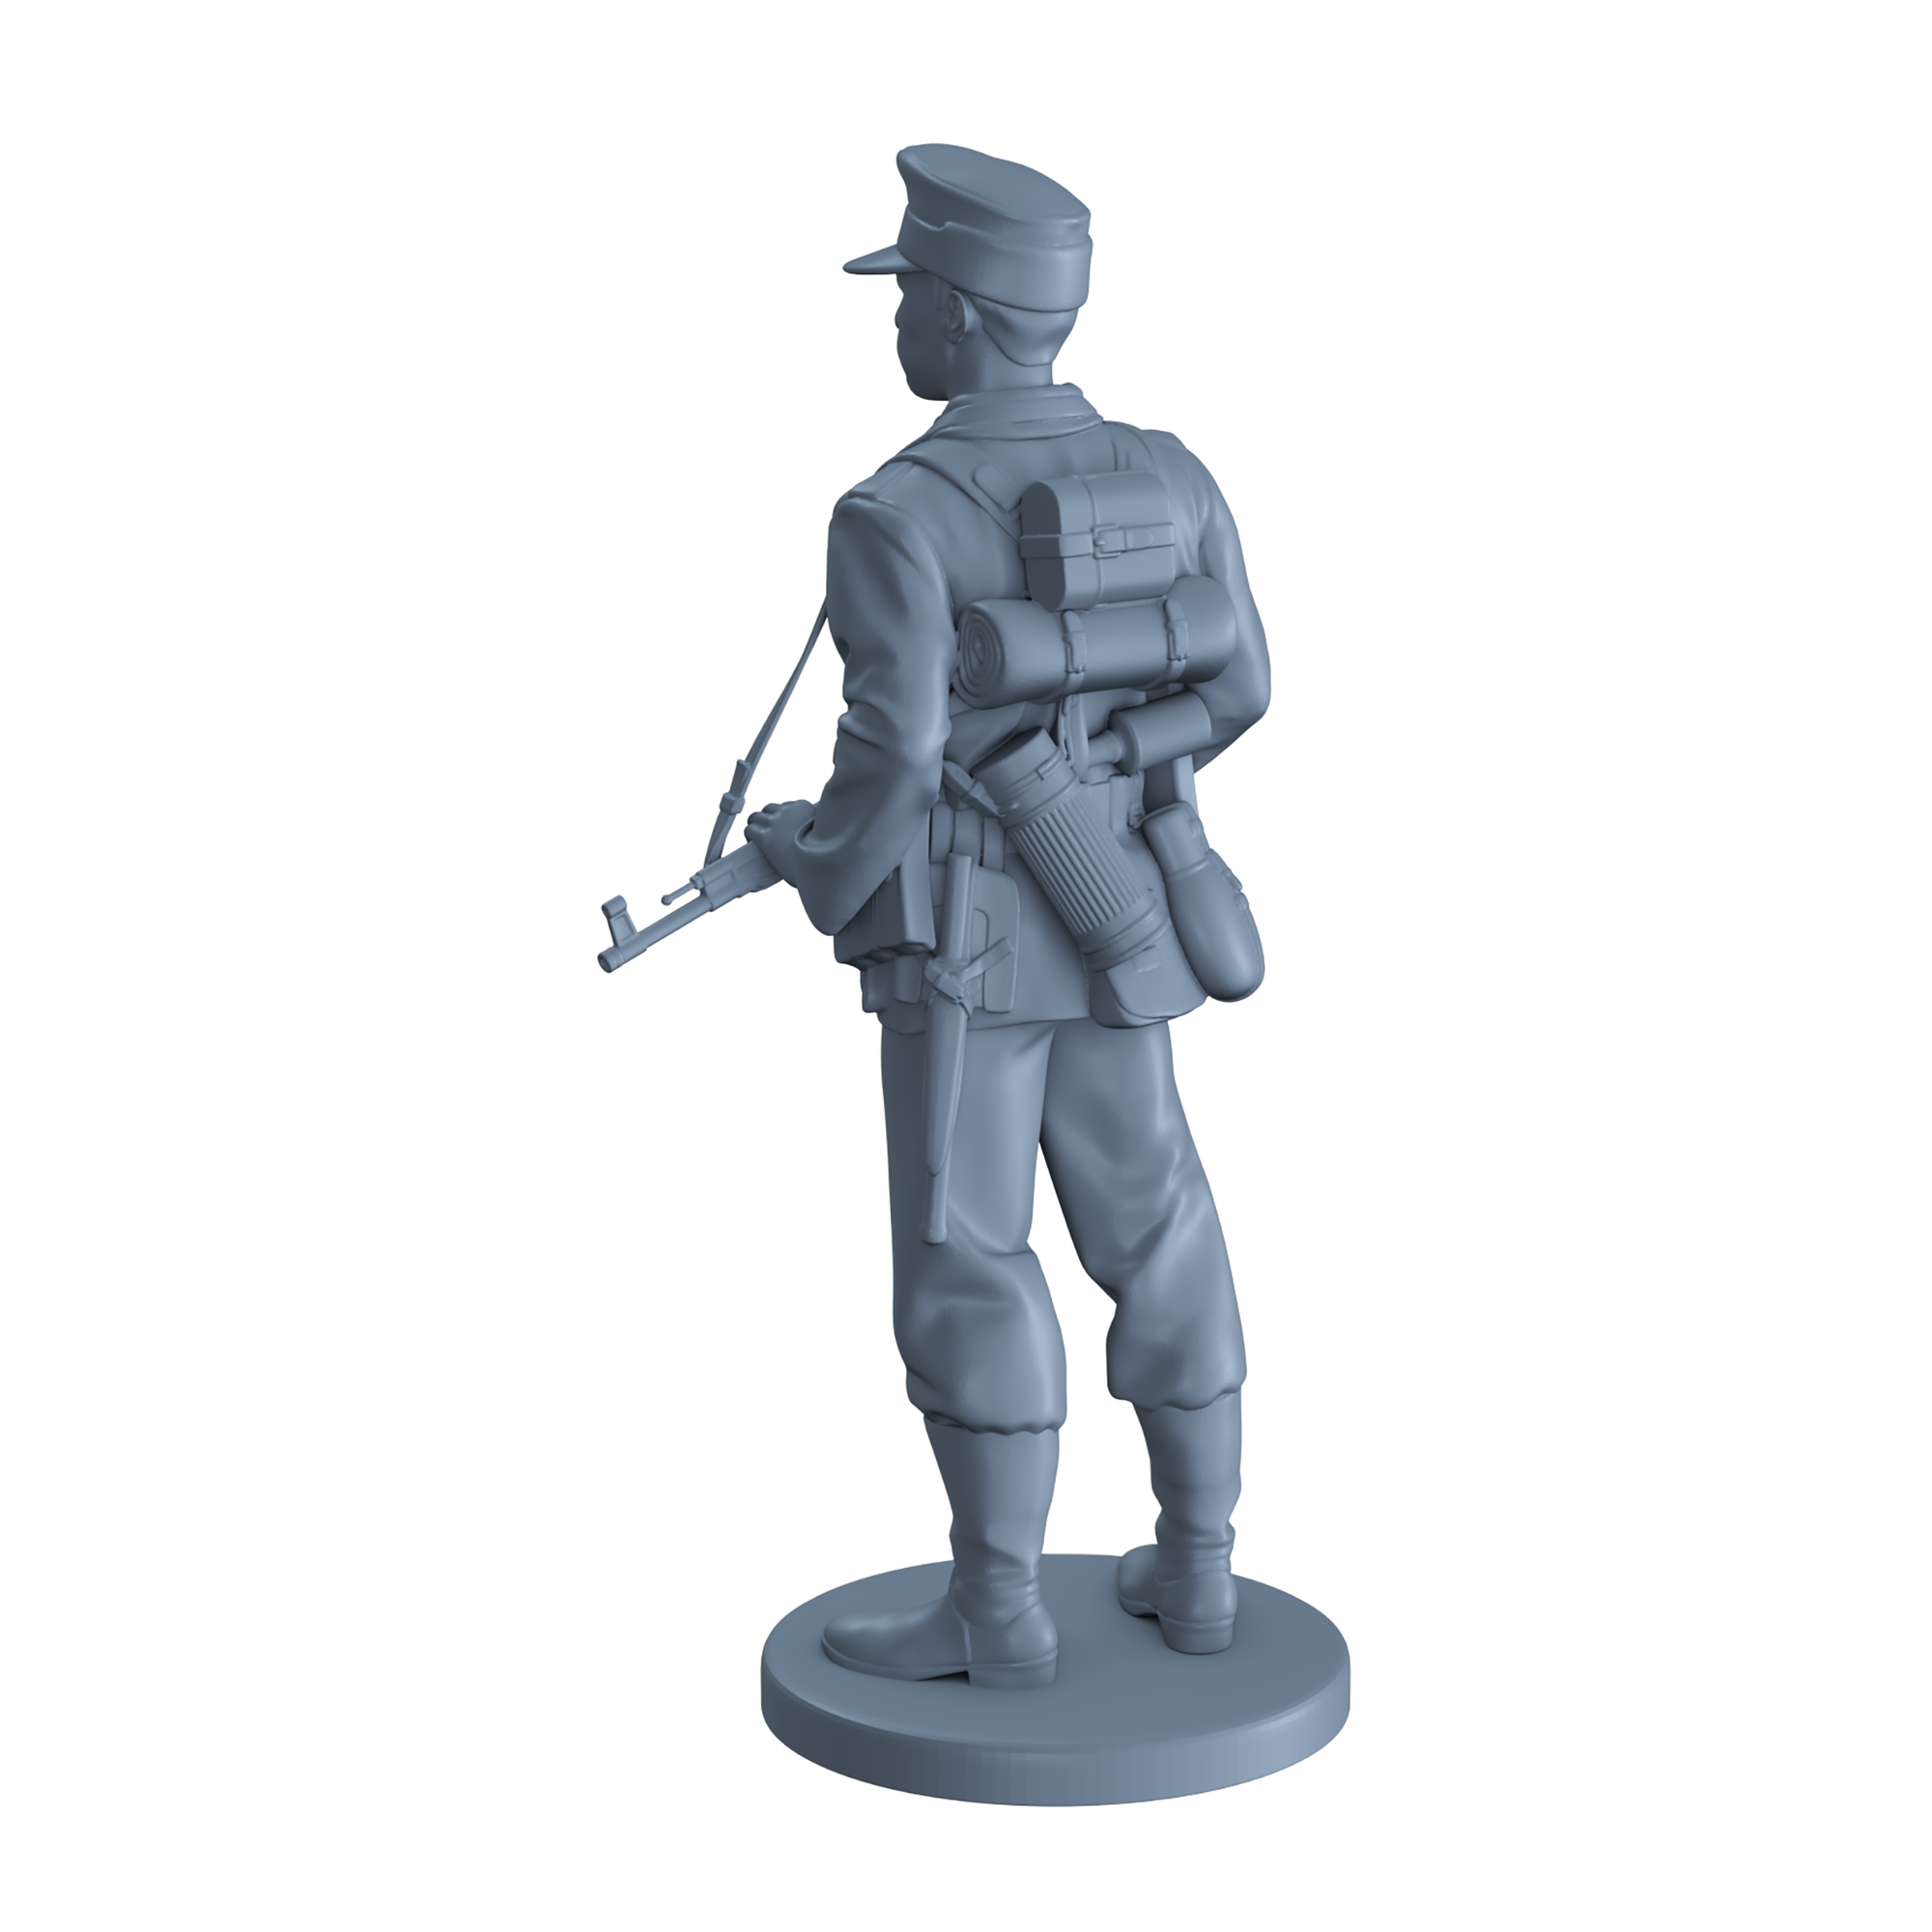 Late War German Soldier Standing